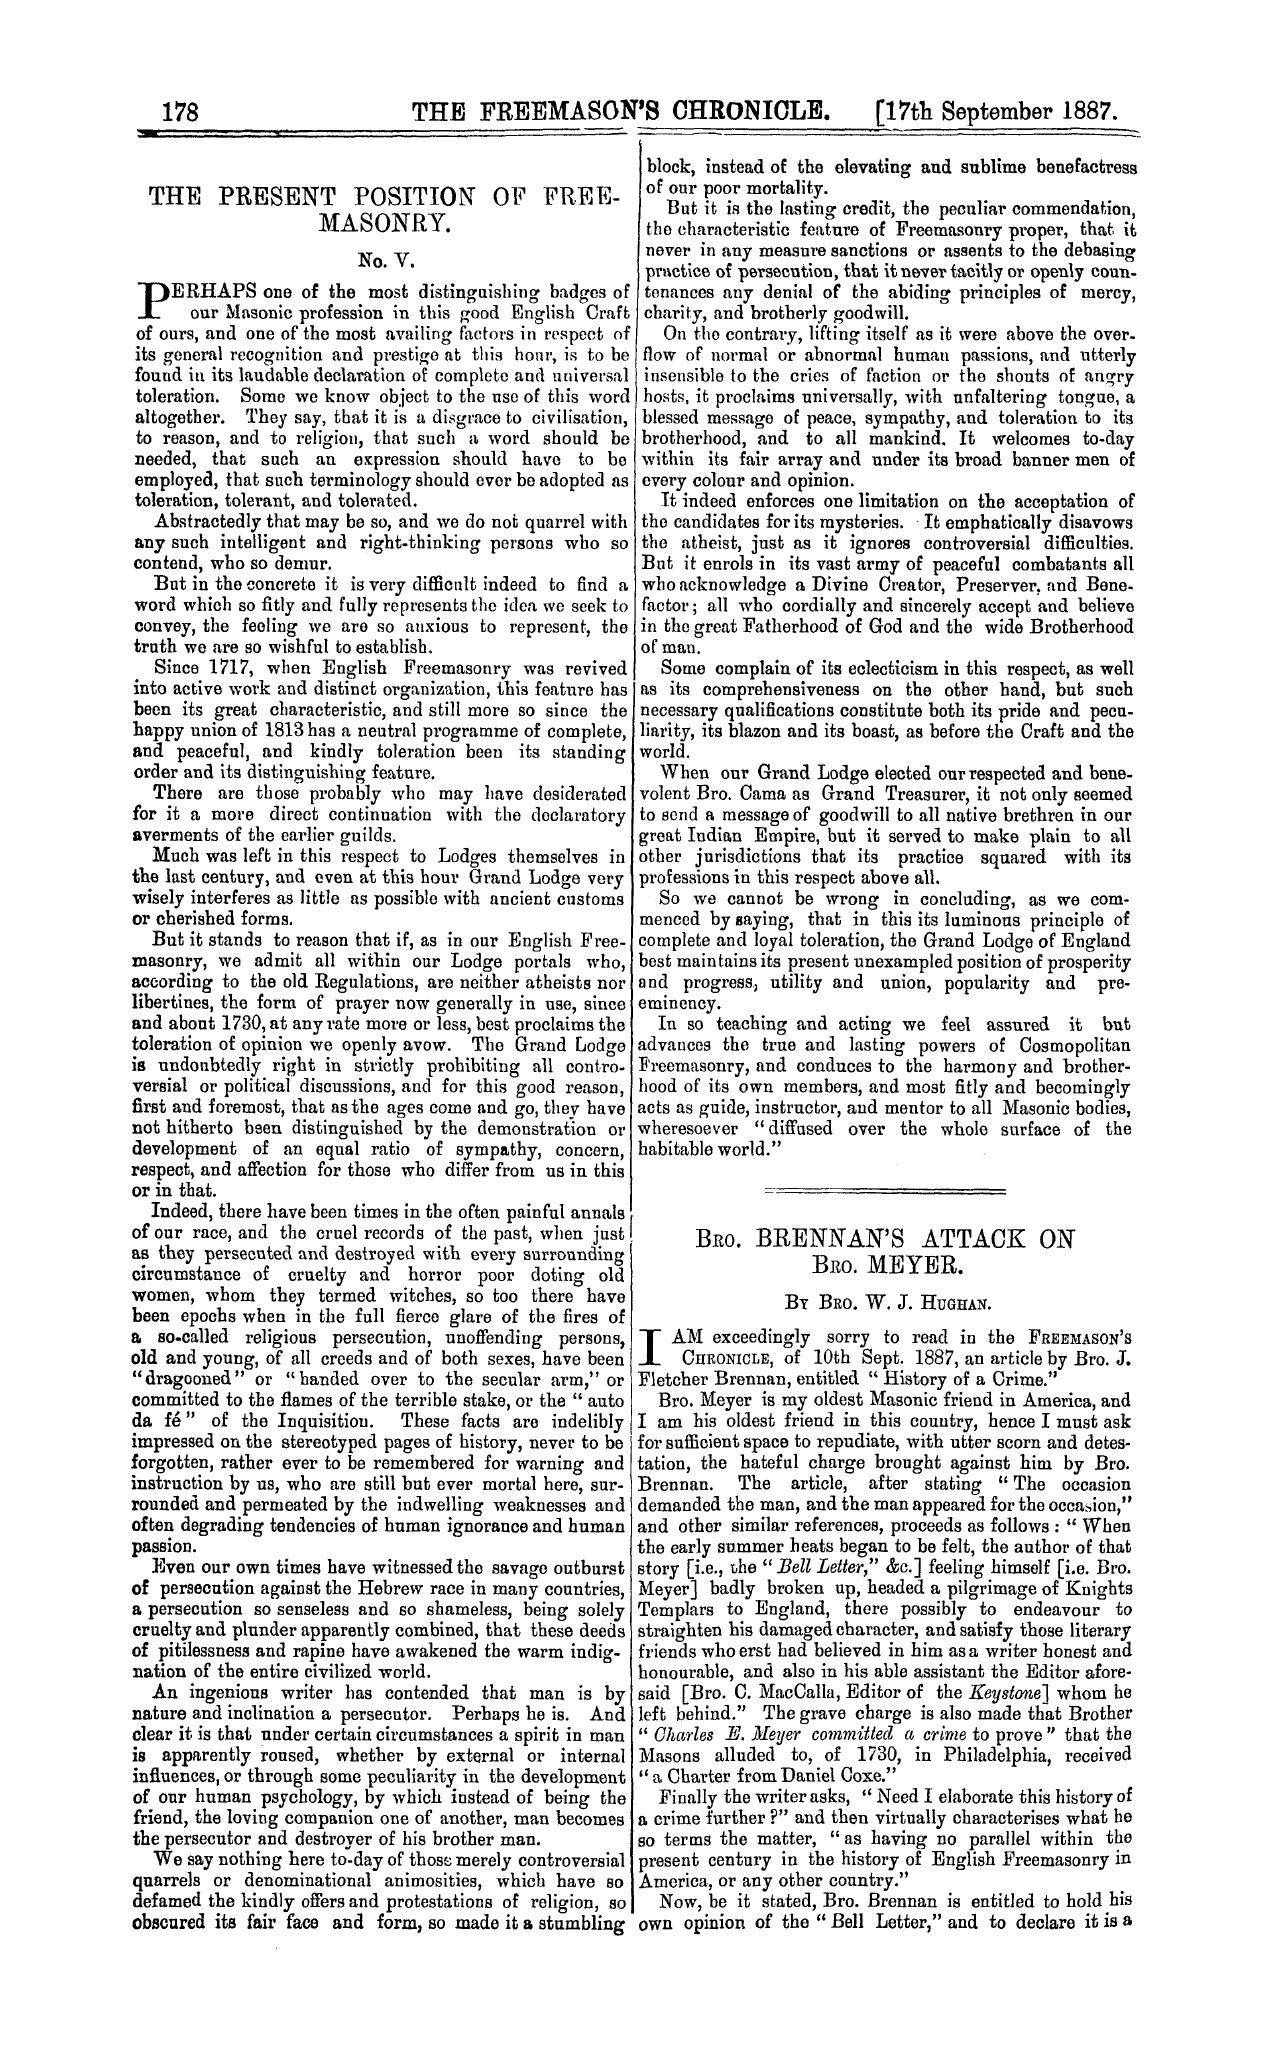 The Freemason's Chronicle: 1887-09-17: 2